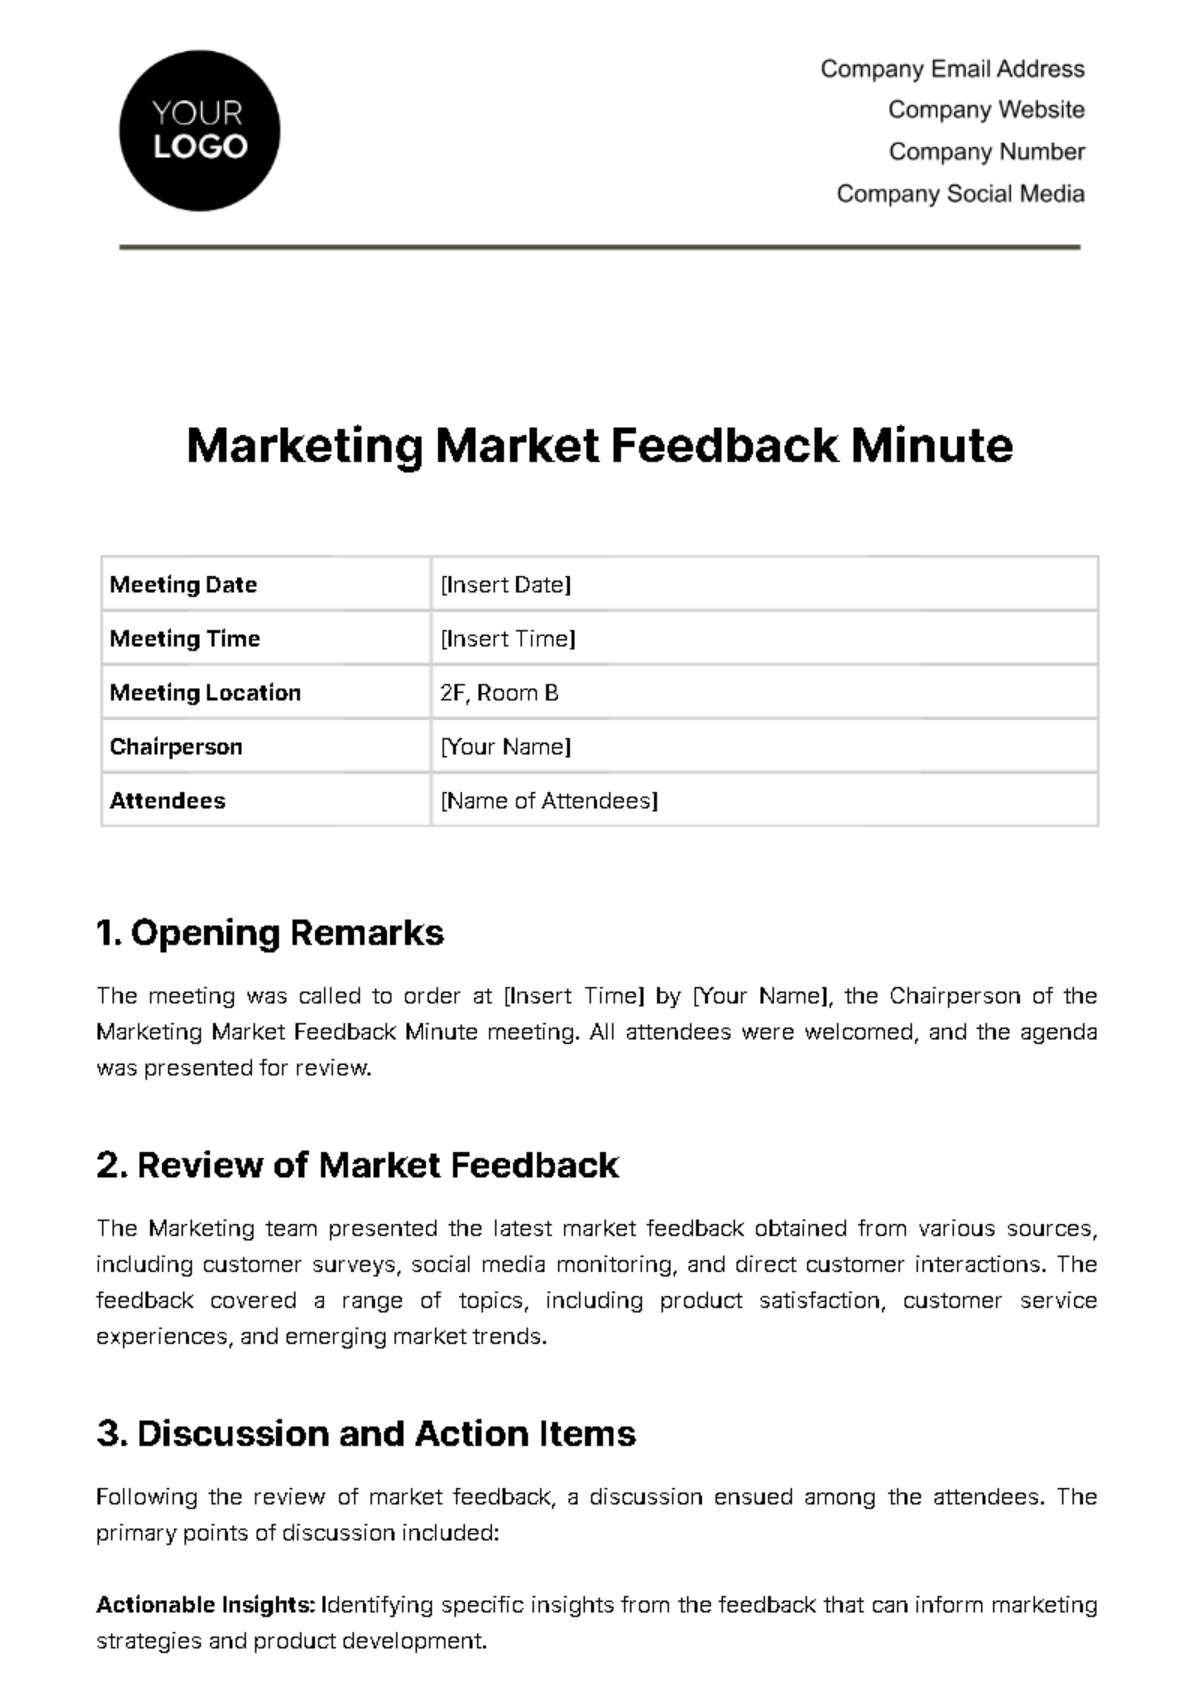 Free Marketing Market Feedback Minute Template